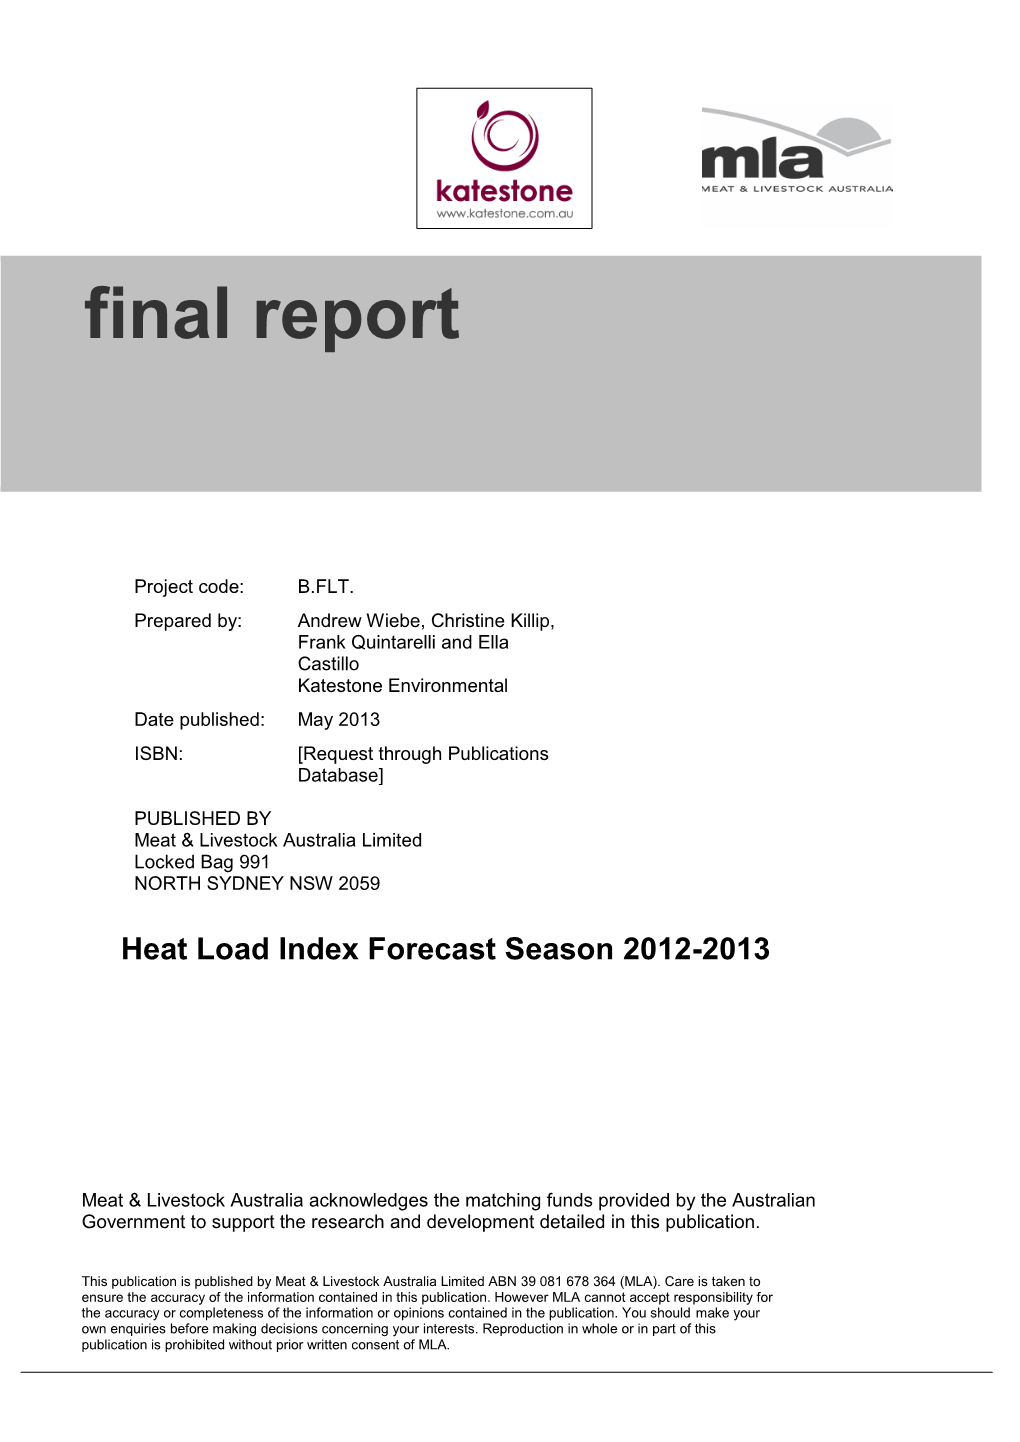 Hli Forecast Season 2011